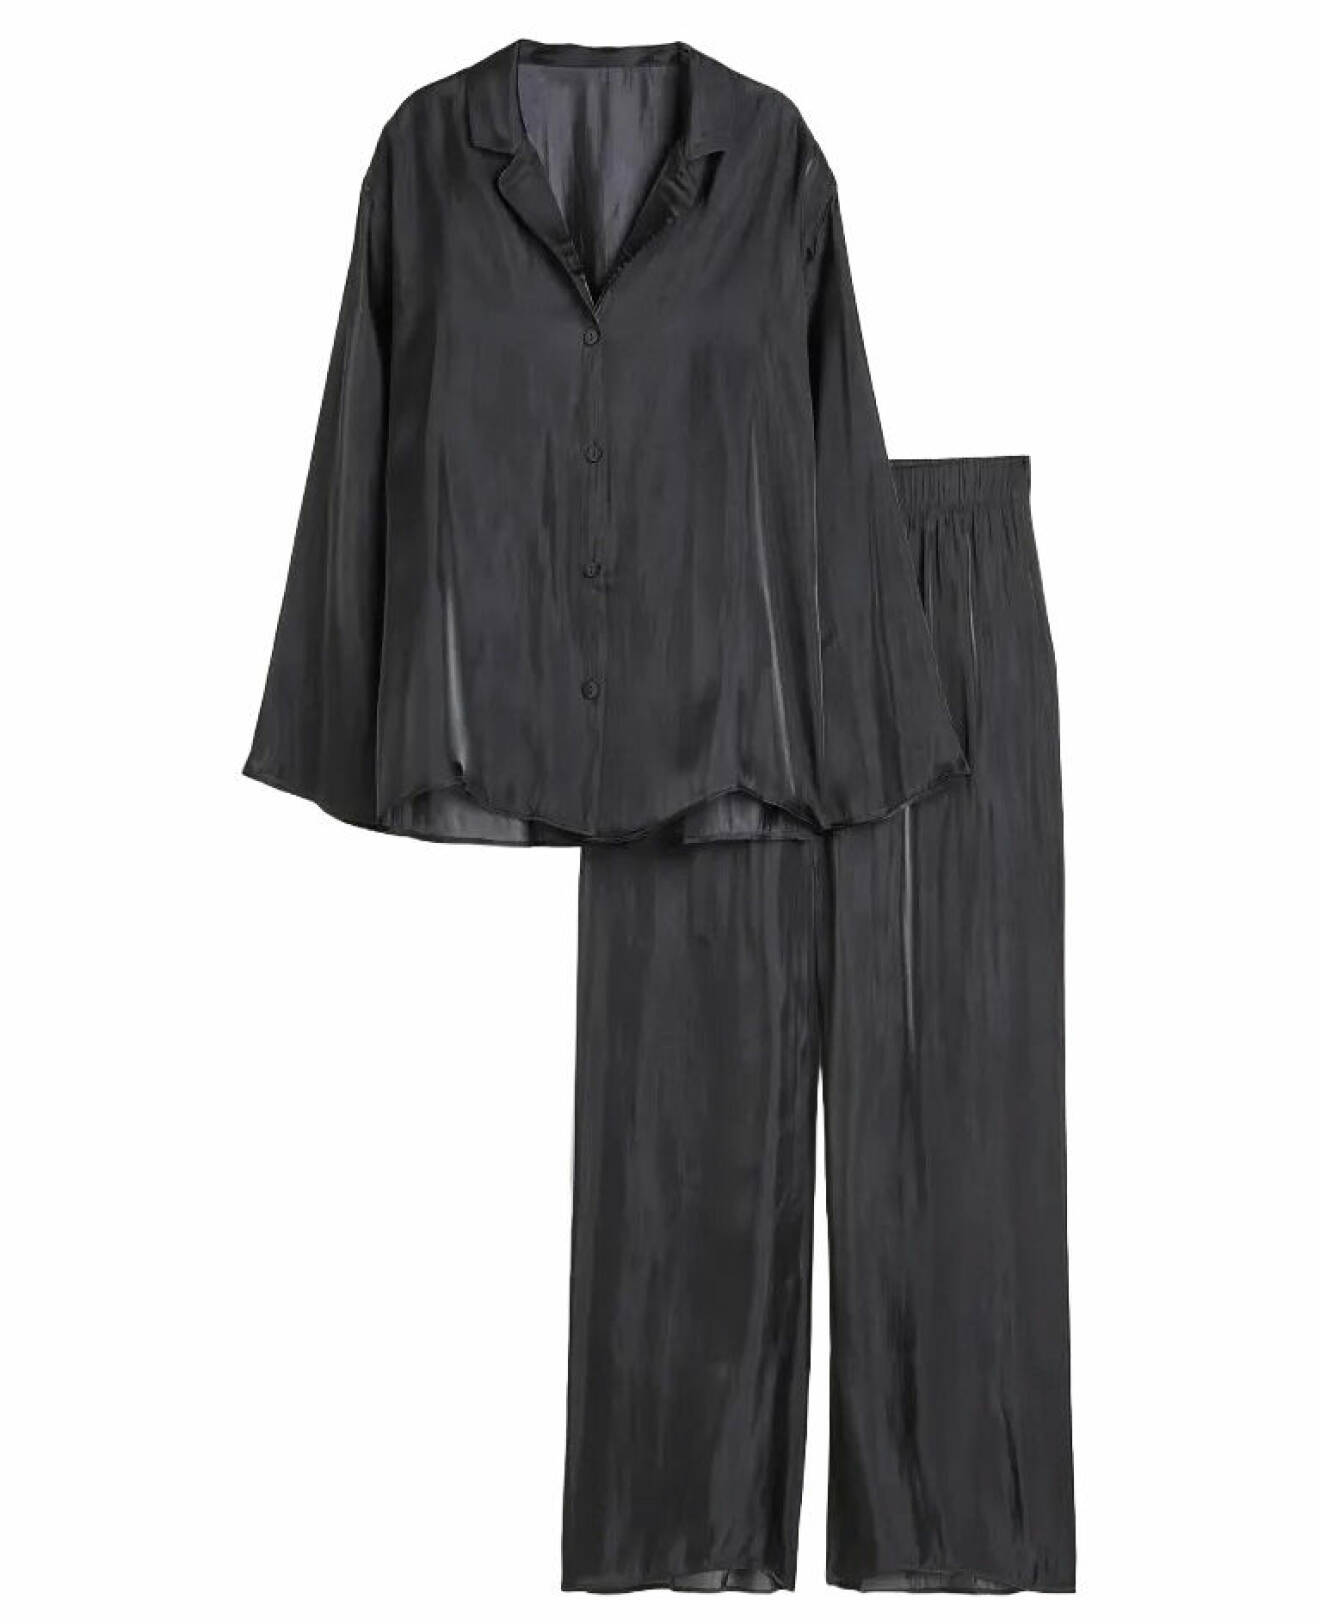 svart pyjamas set i satin från hm